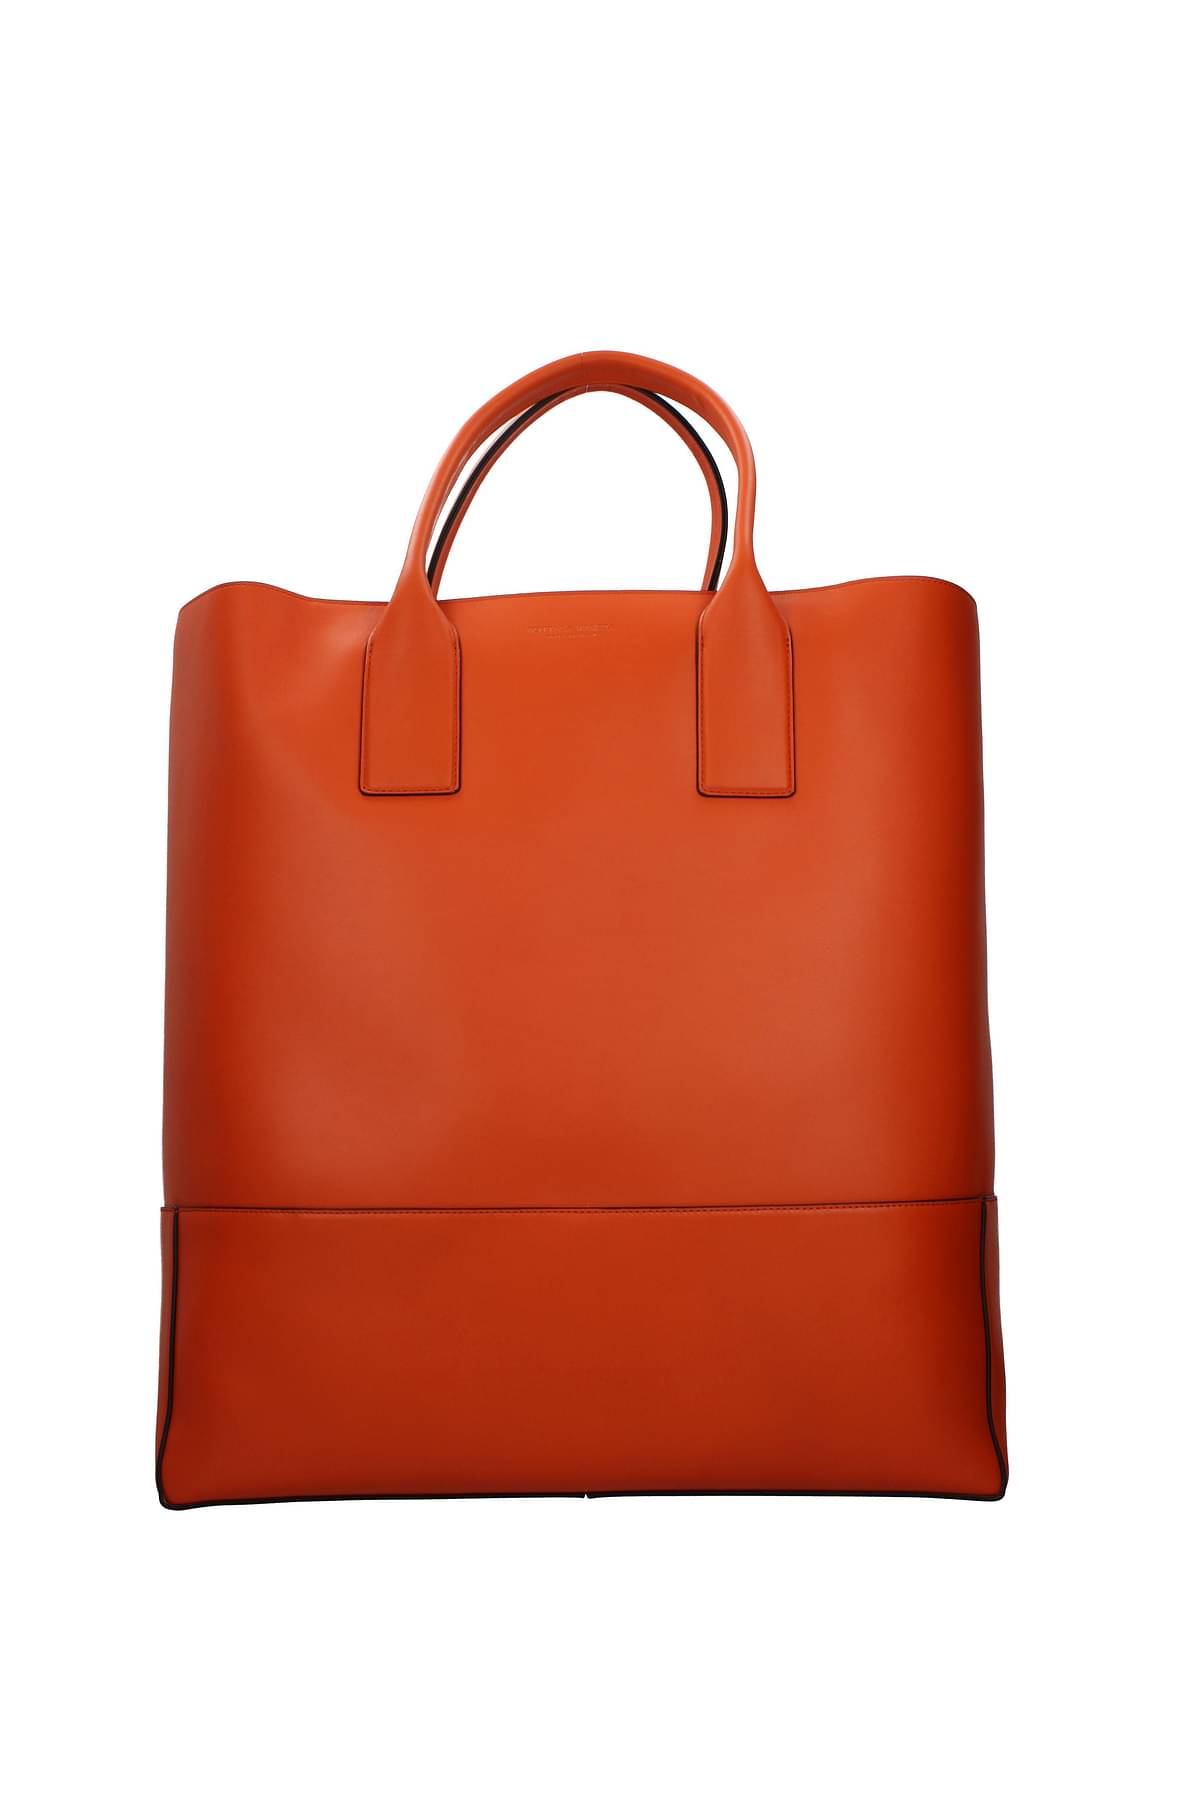 Bottega Veneta Travel Bags Men 573759VMAU07686 Leather Orange 1837,5€